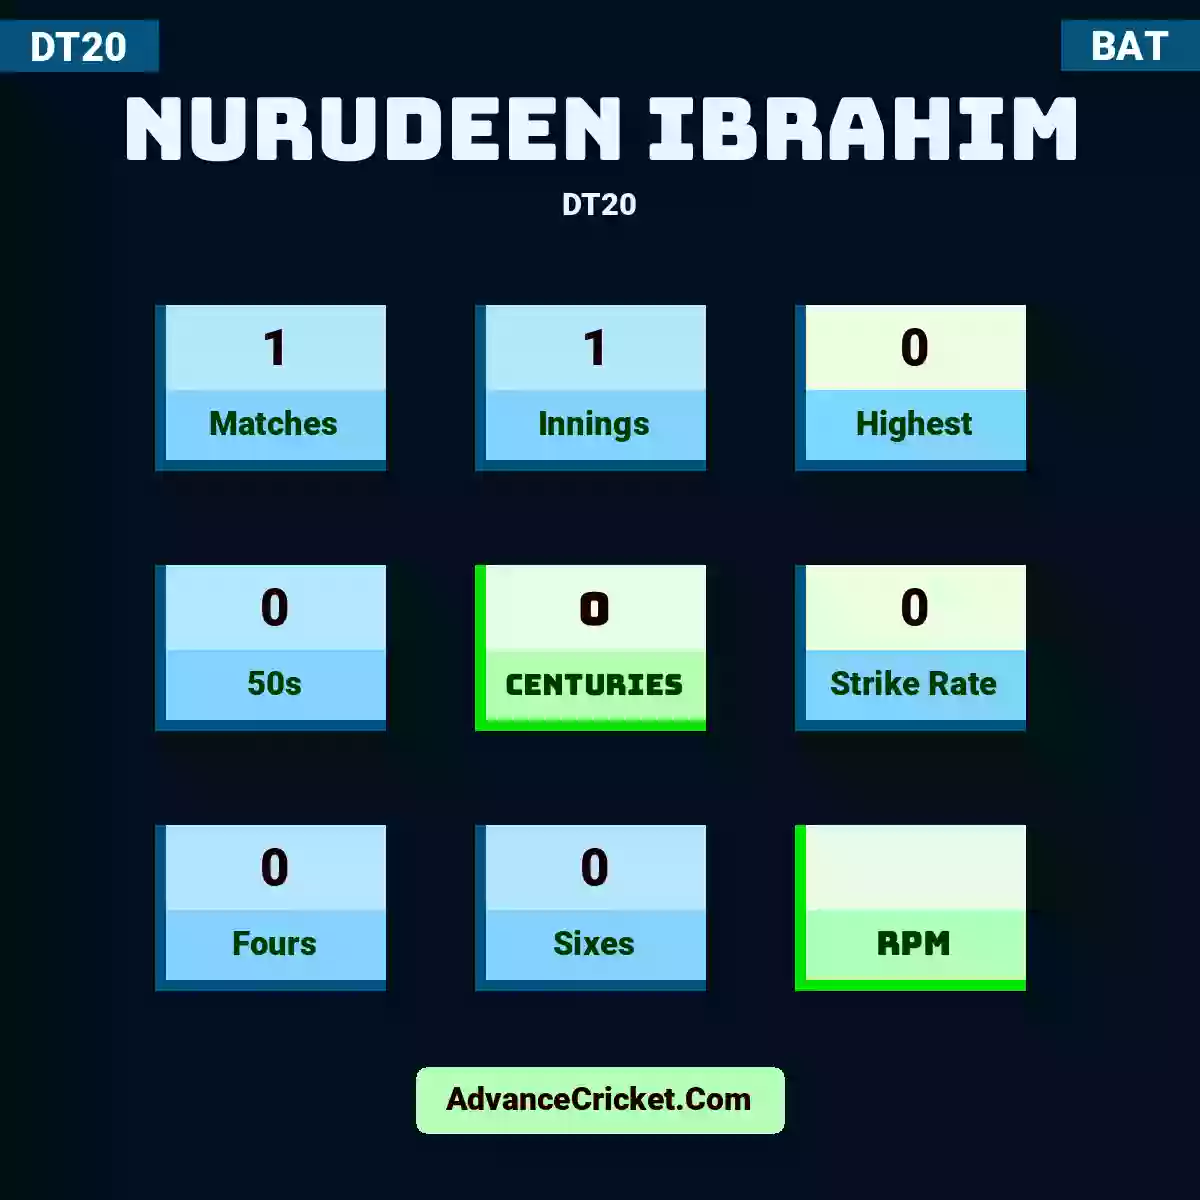 Nurudeen Ibrahim DT20 , Nurudeen Ibrahim played 1 matches, scored 0 runs as highest, 0 half-centuries, and 0 centuries, with a strike rate of 0. N.Ibrahim hit 0 fours and 0 sixes.